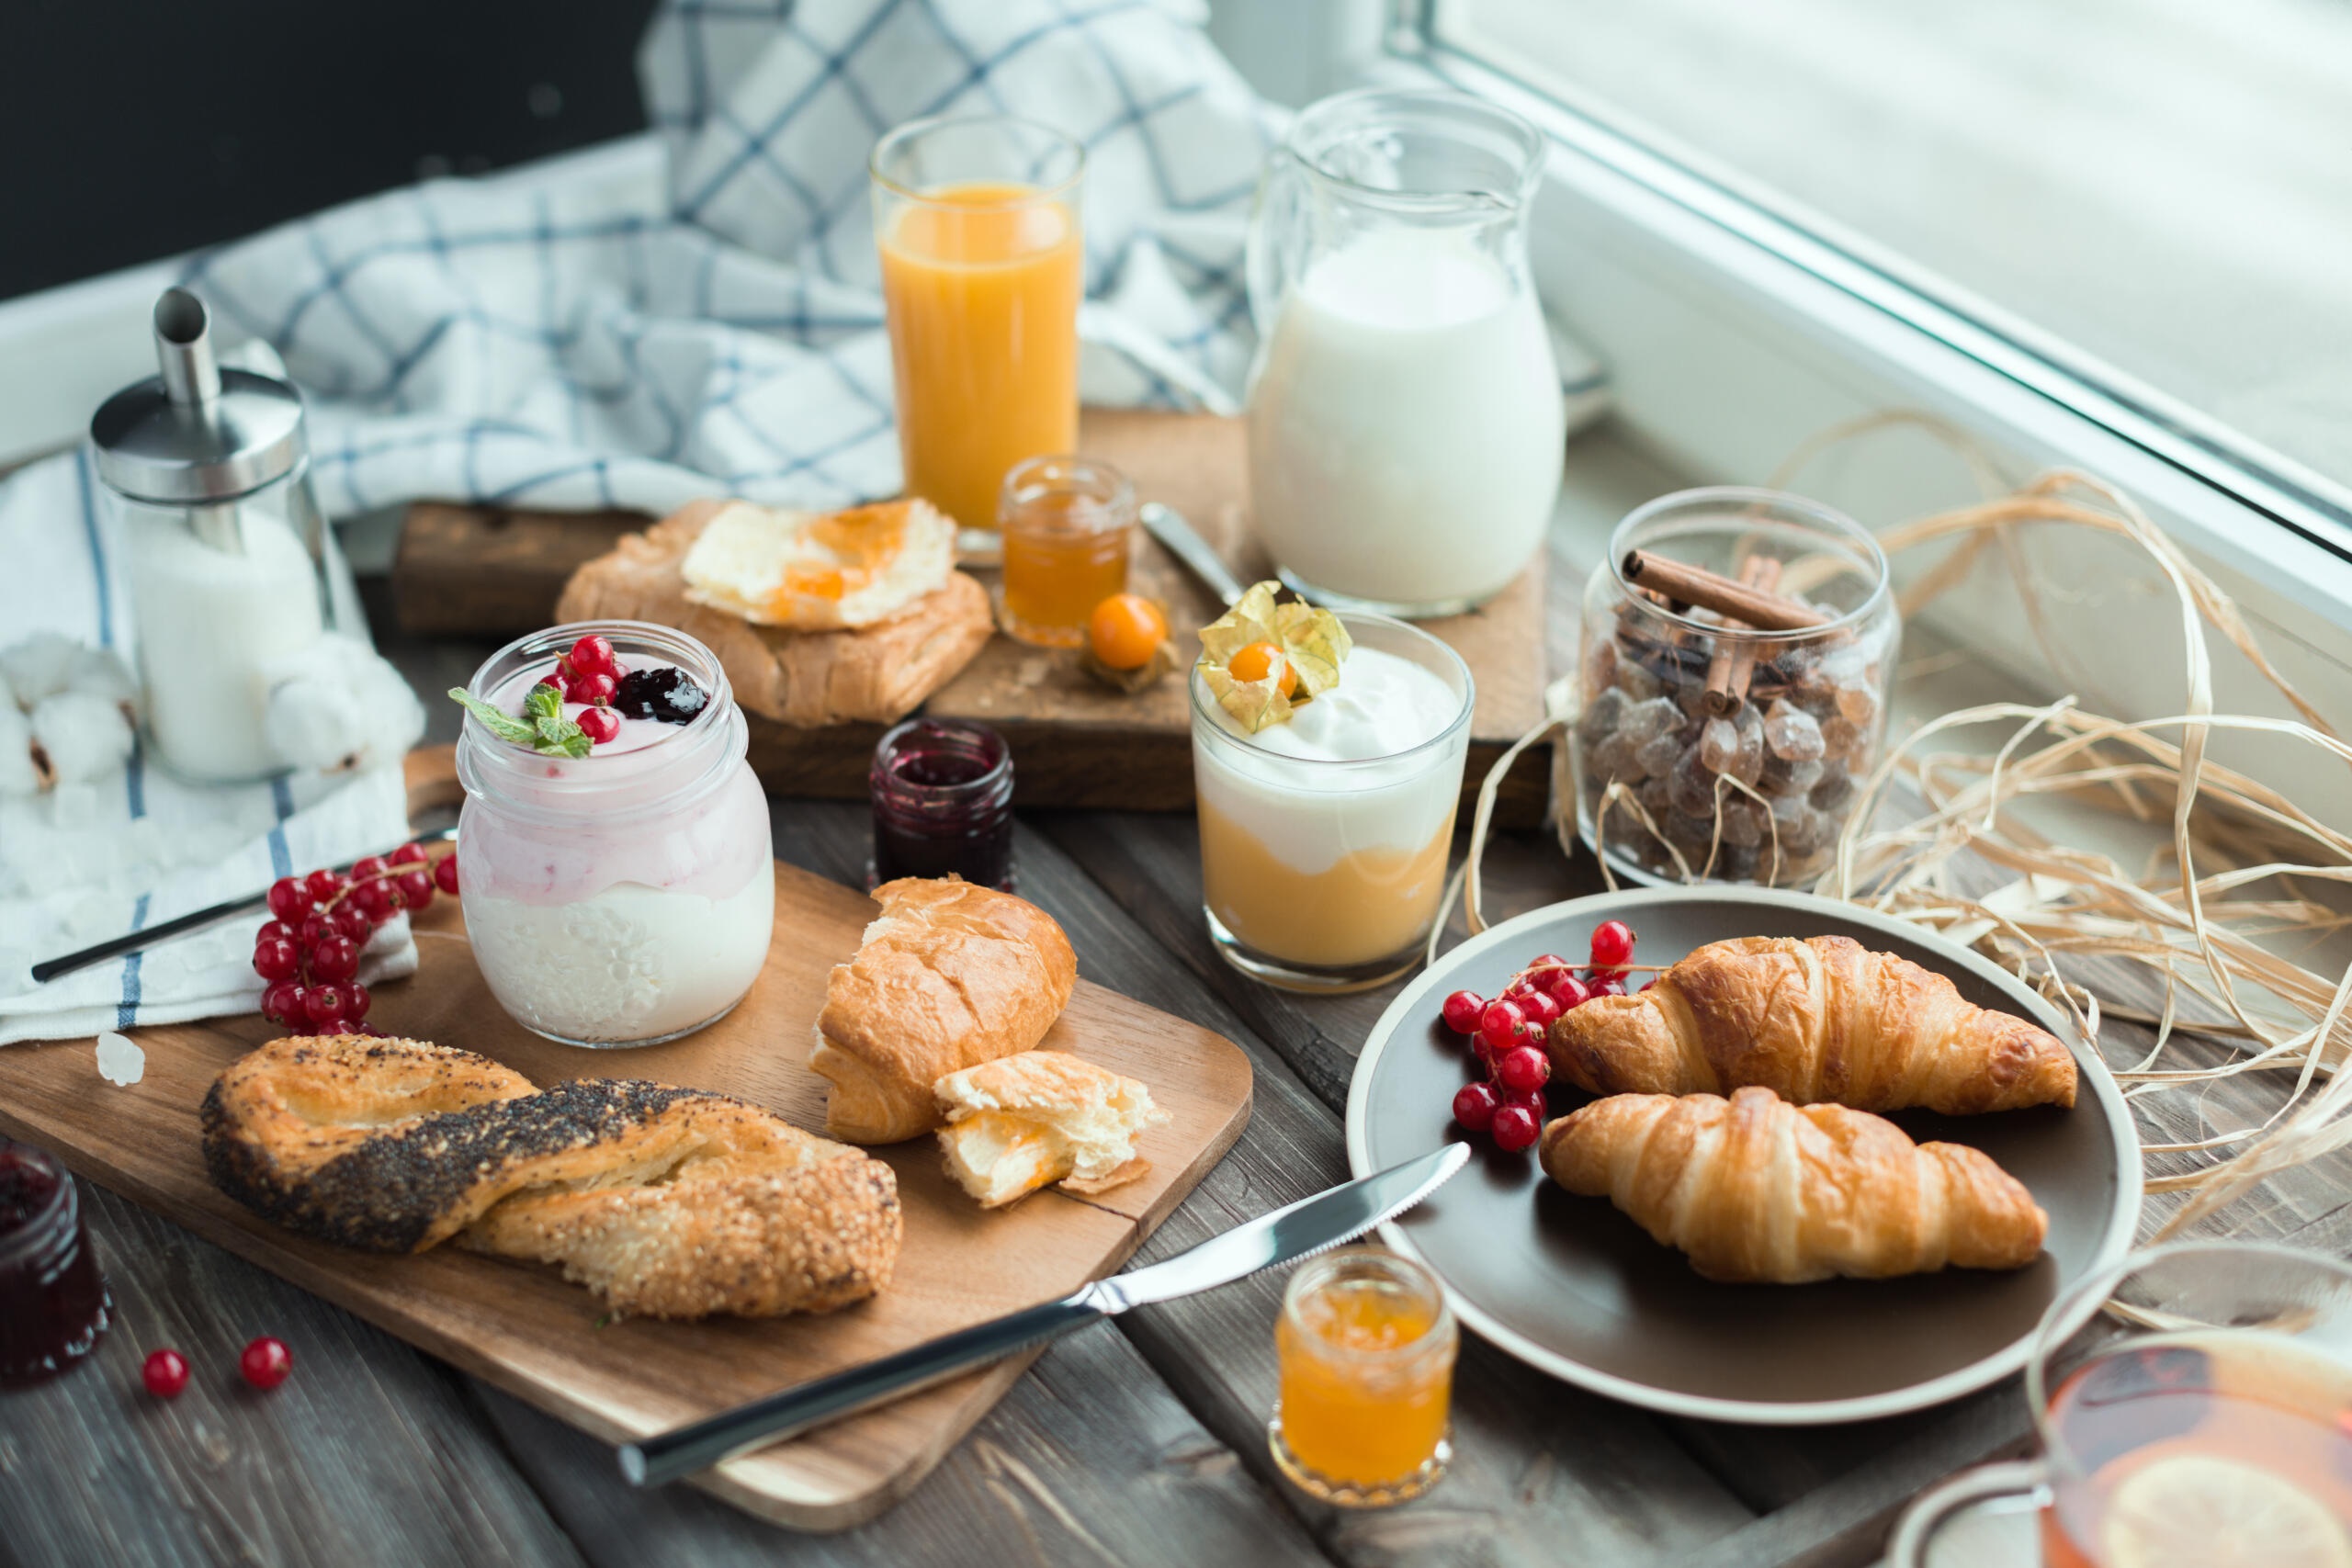 Fuller french. Красивый завтрак. Завтрак фото. Утренний завтрак. Завтрак с молоком.